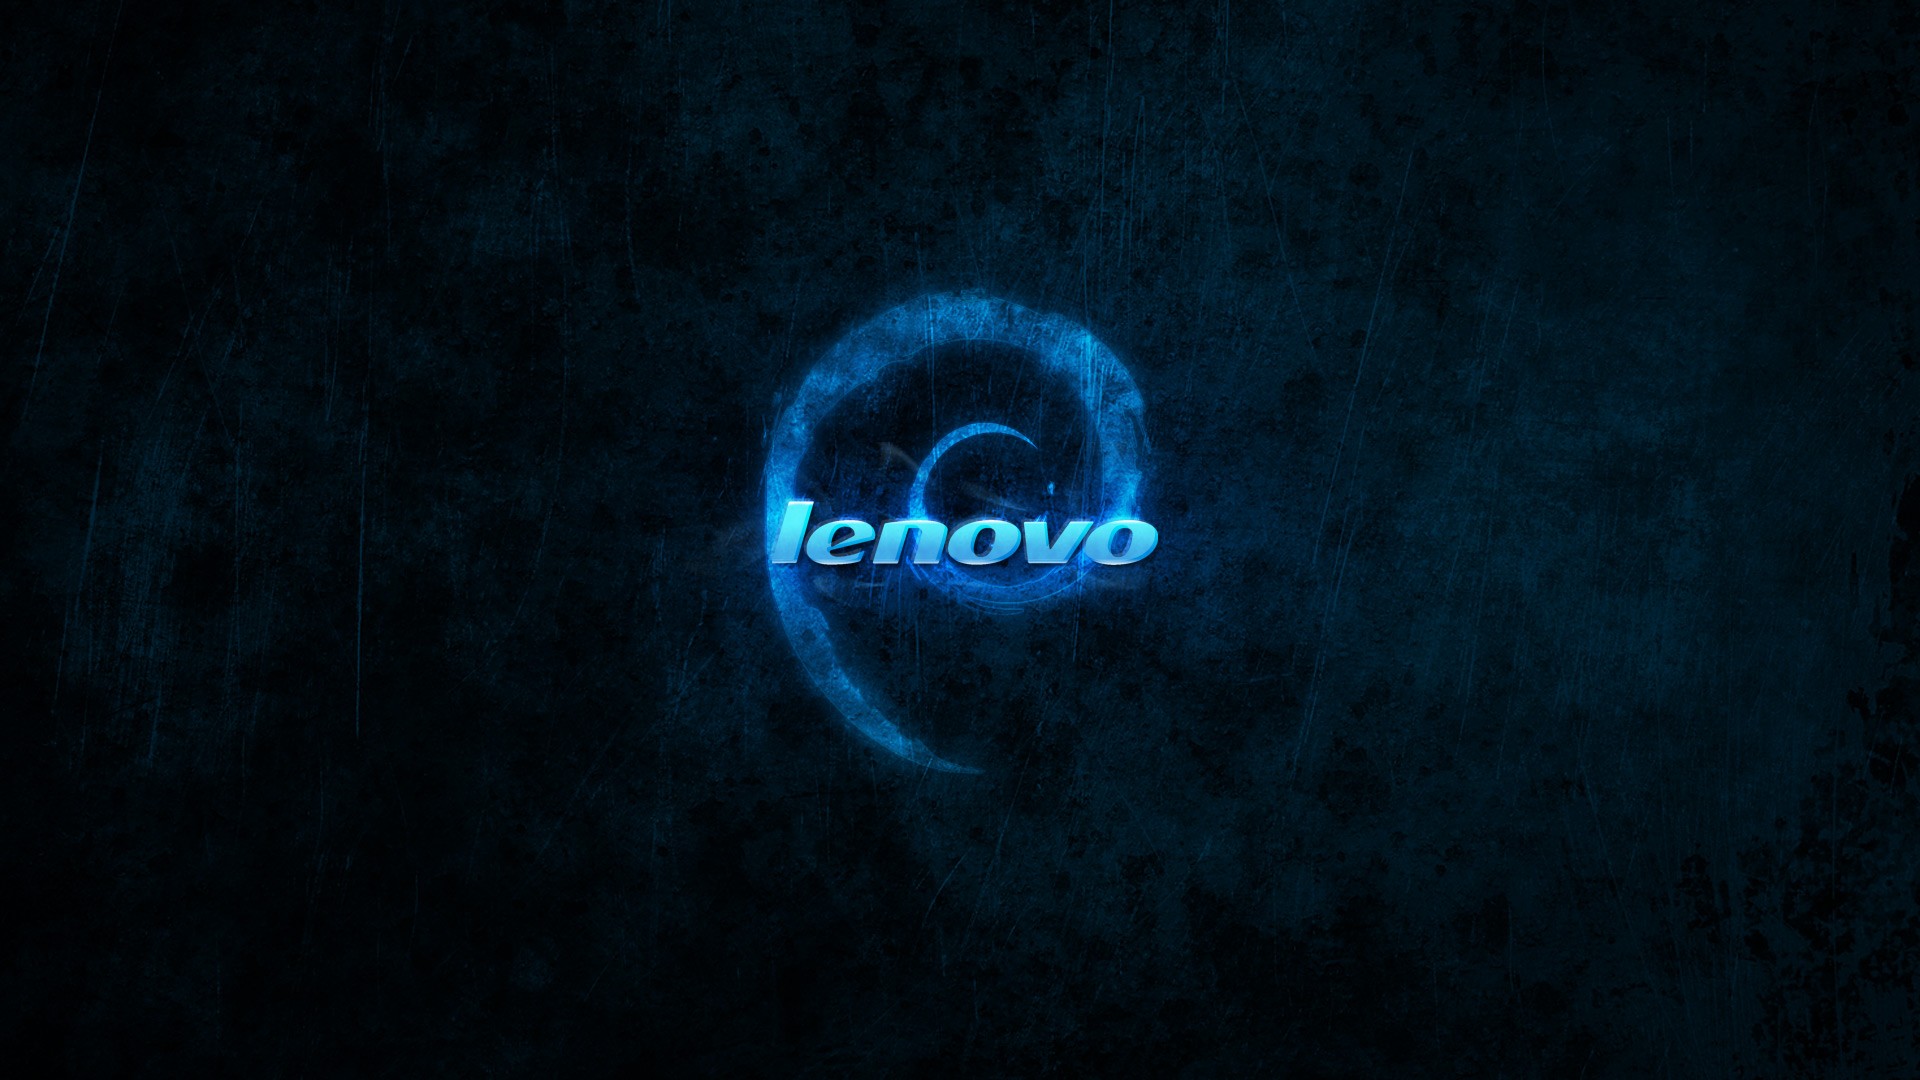 Popular Lenovo Image for Phone